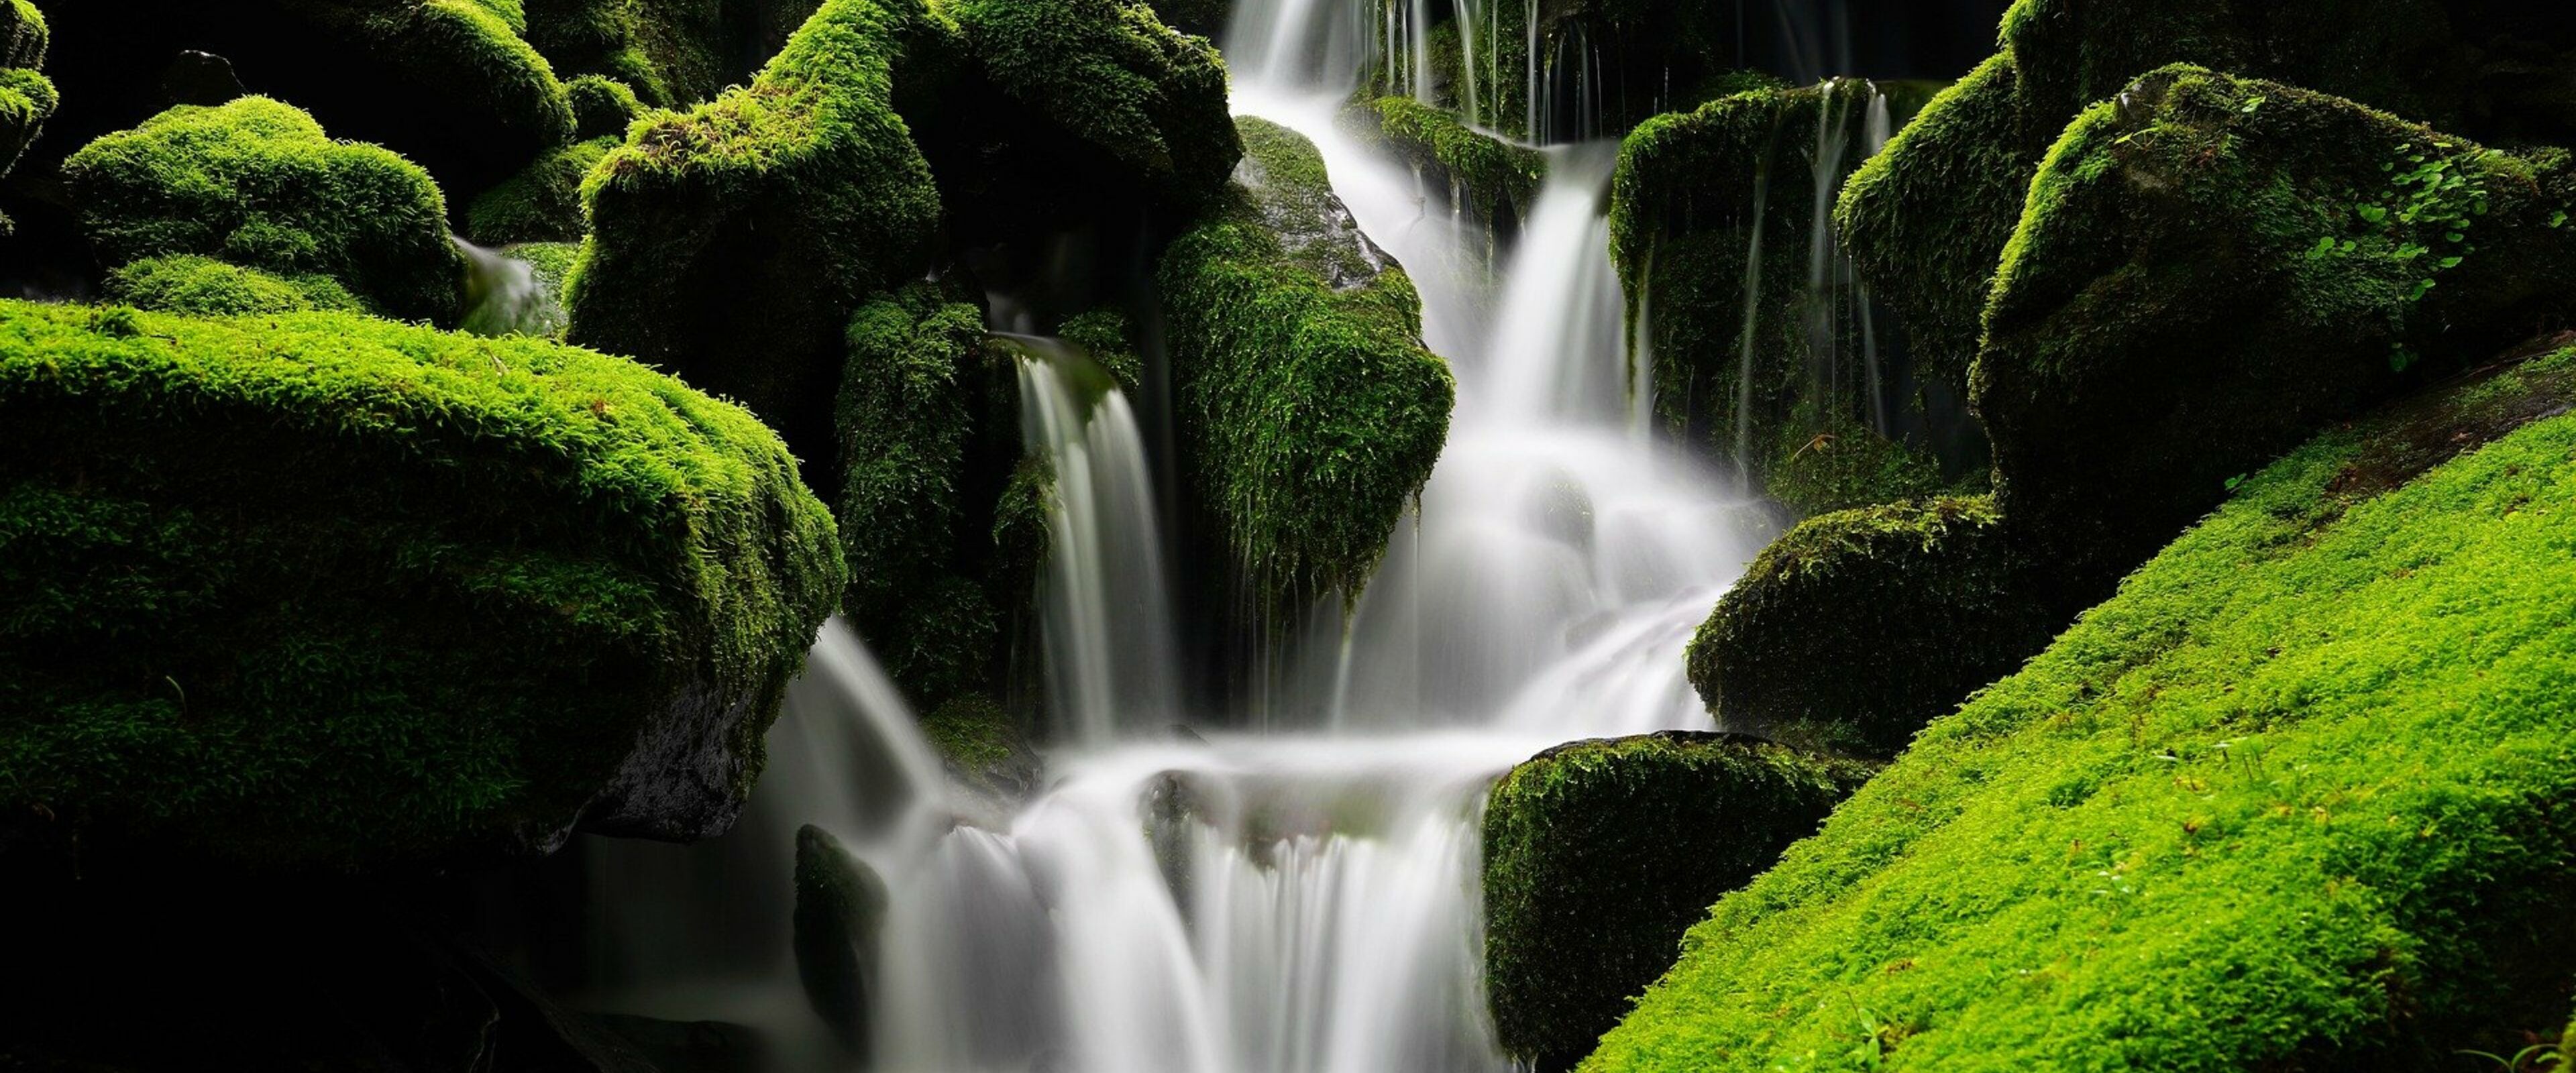 Wasserfall Wildwasser